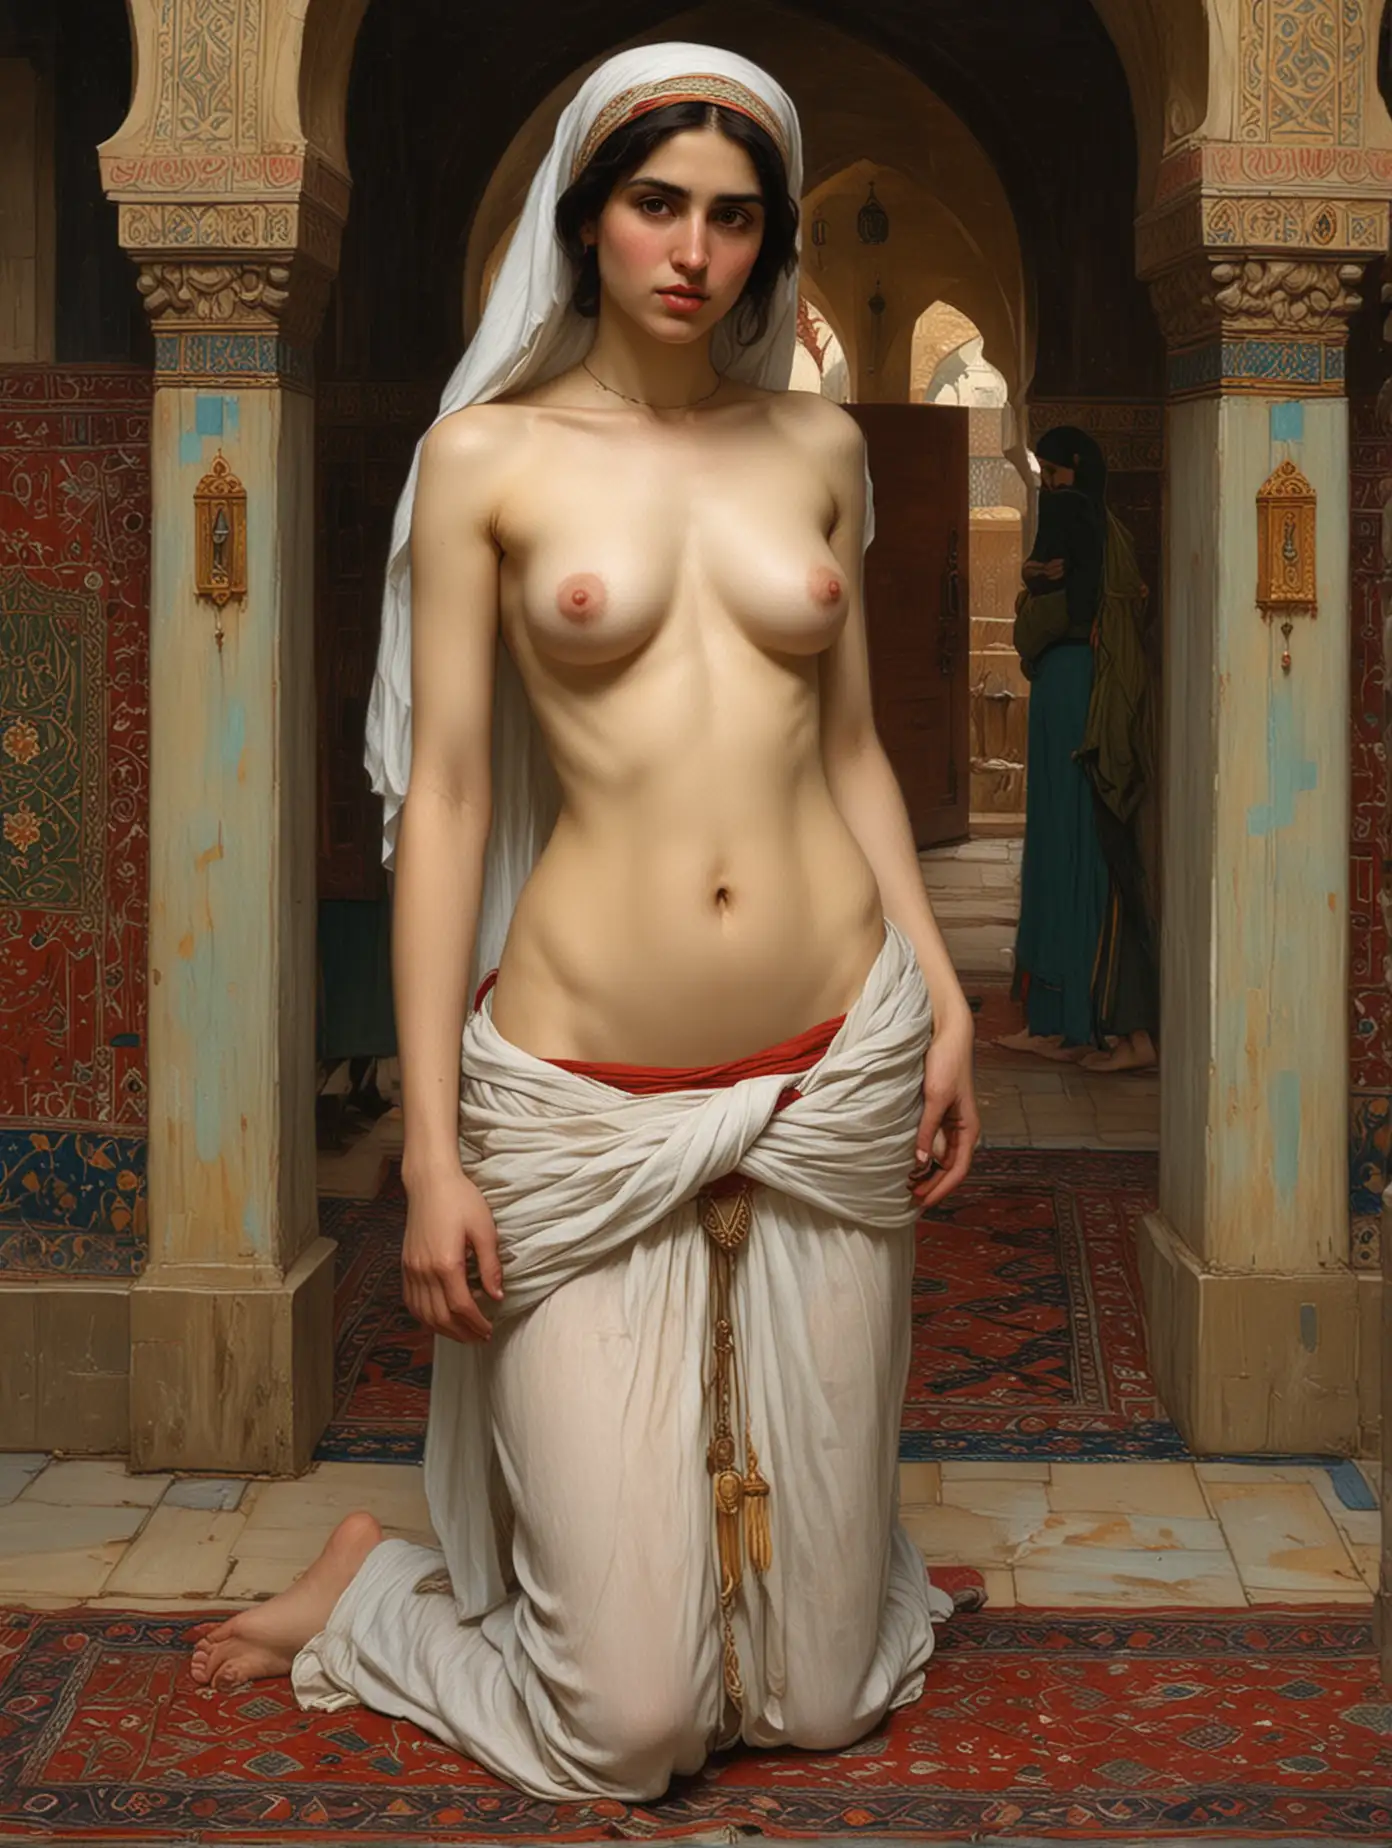 John William Waterhouse painting of Muslim woman topless in mosque.